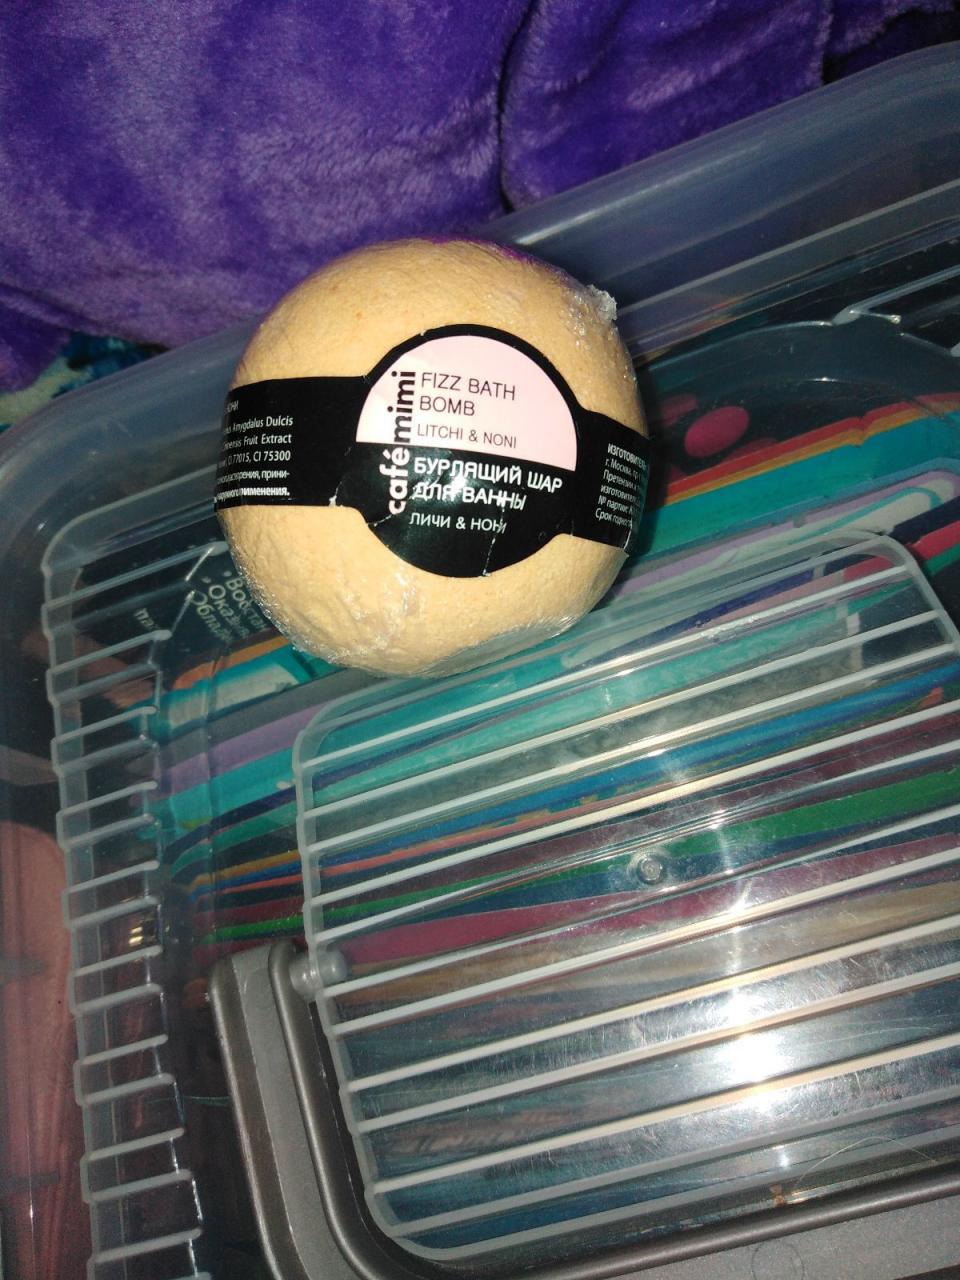 Отзыв на товар: Бурлящий шар для ванны "Личи и нони". Cafe mimi.